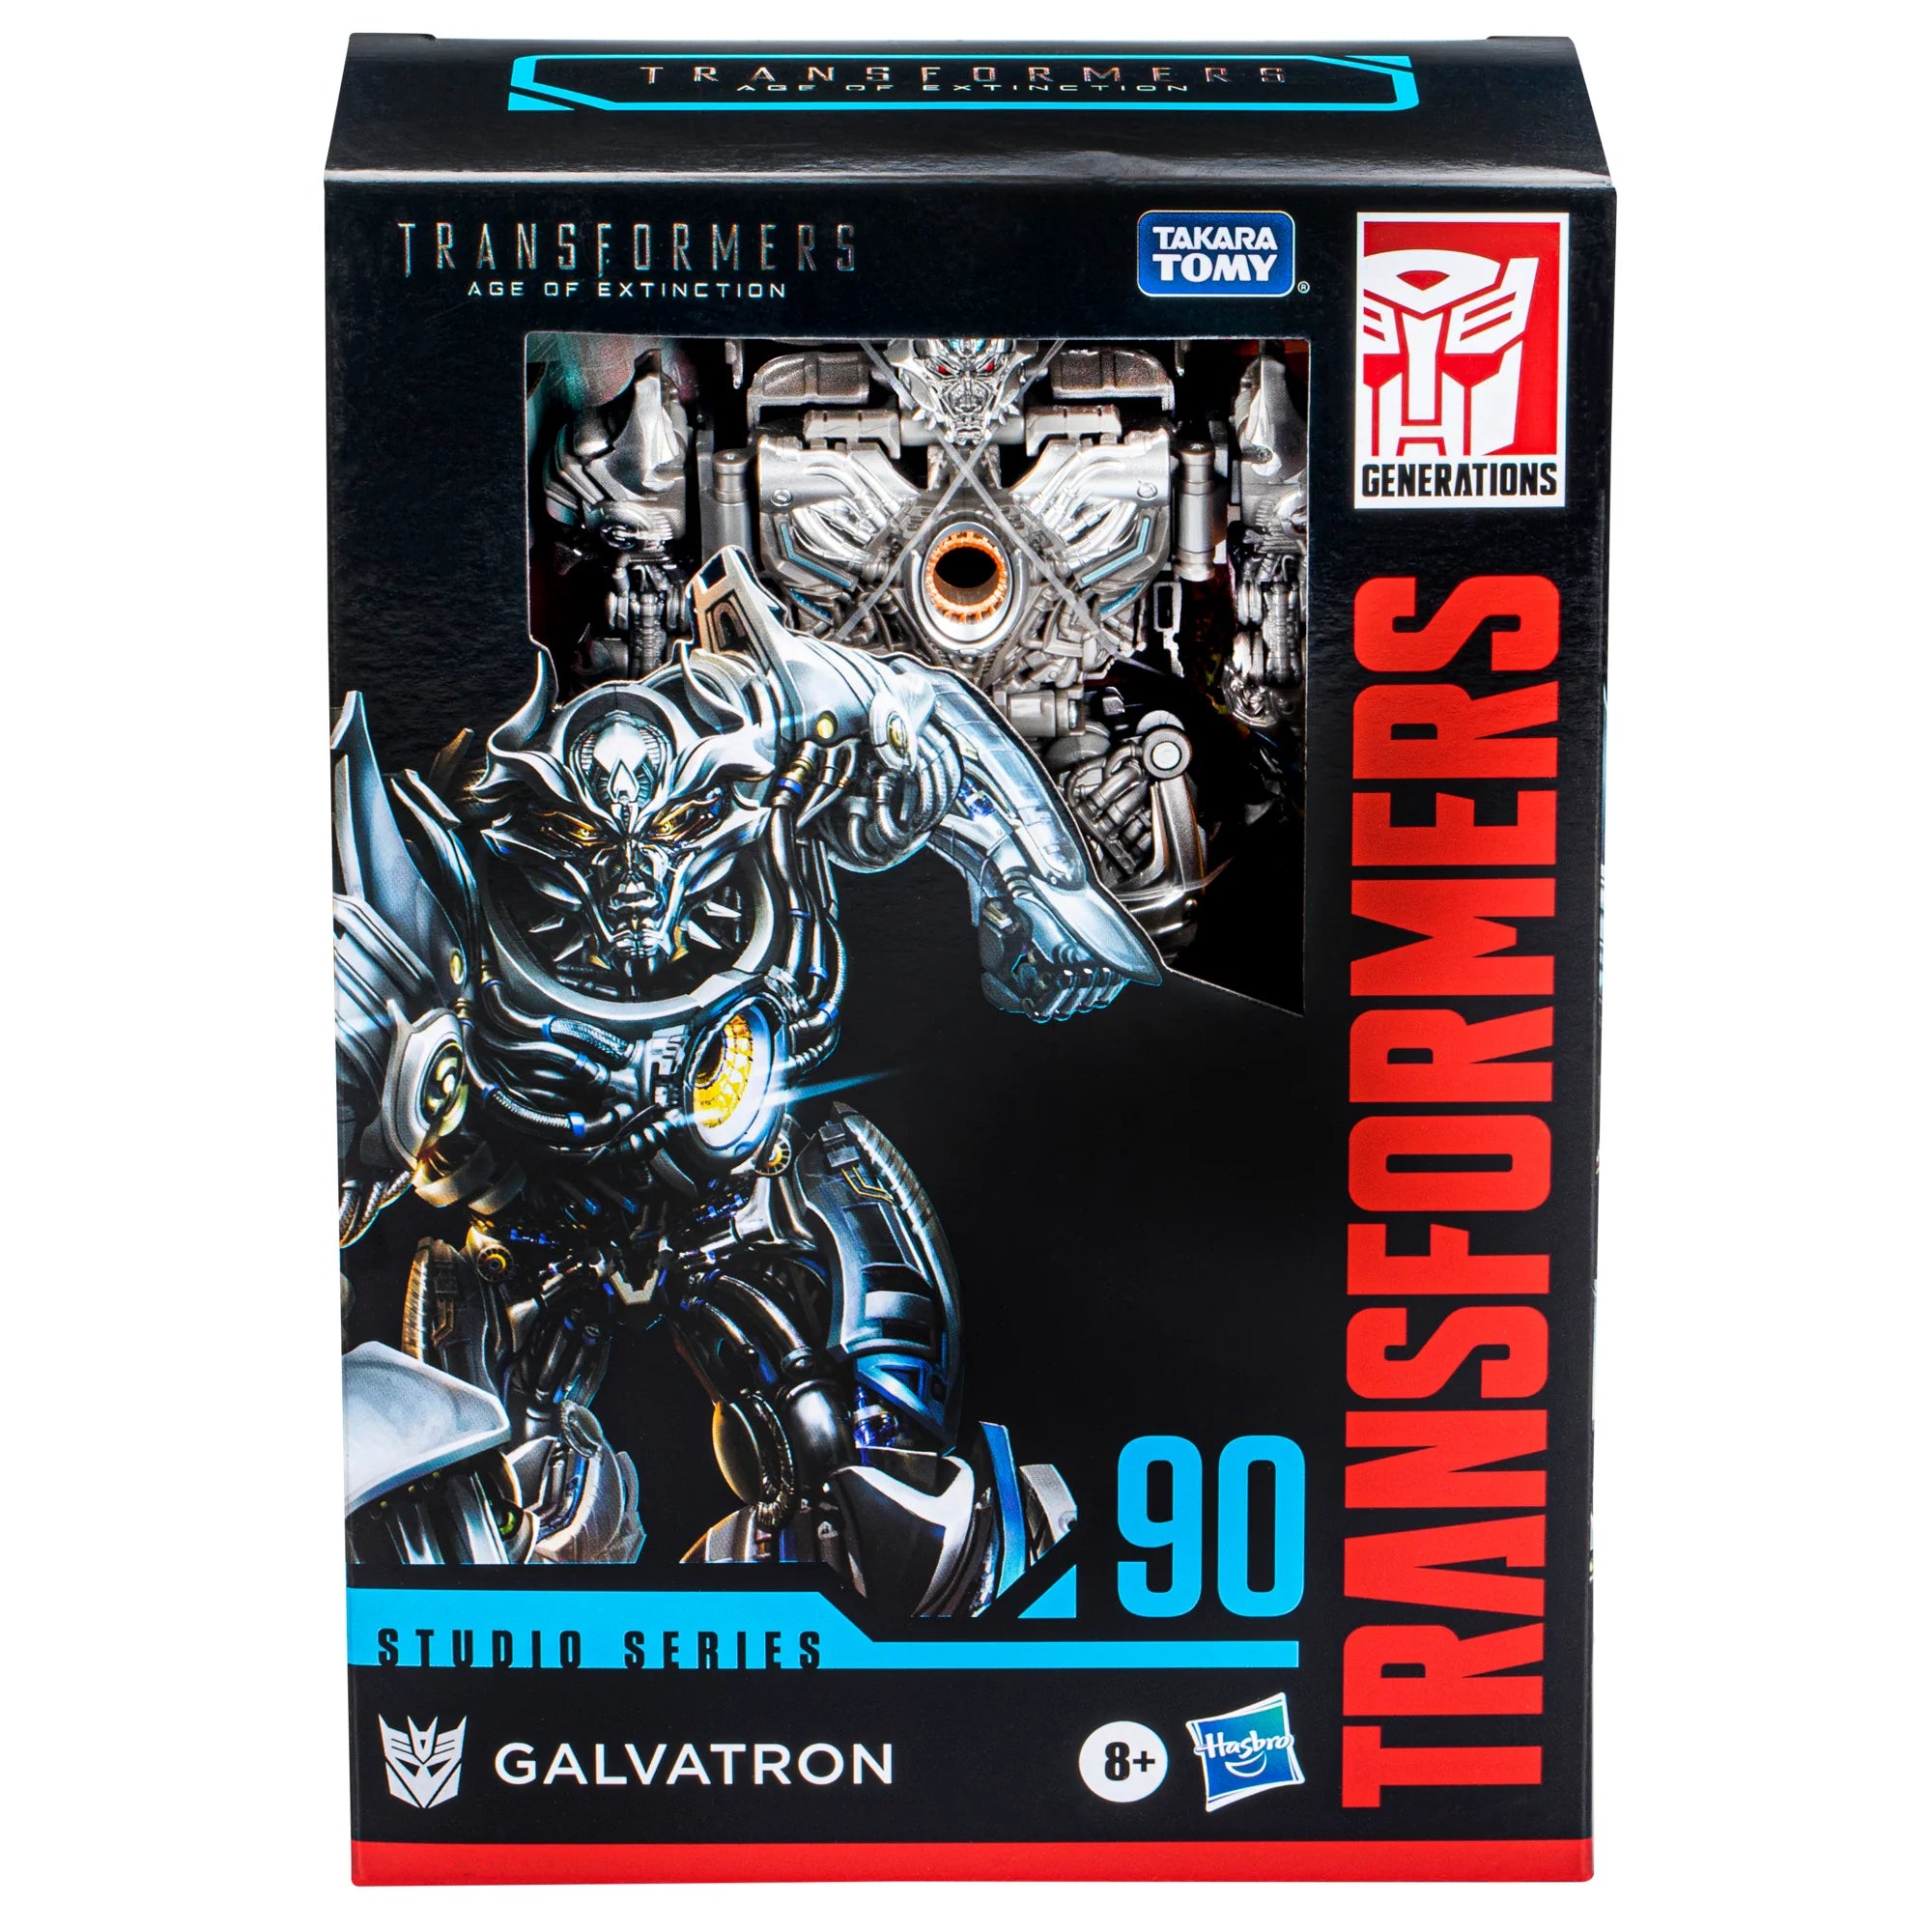 Transformers Age of Extinction Studio Series: Galvatron Figure